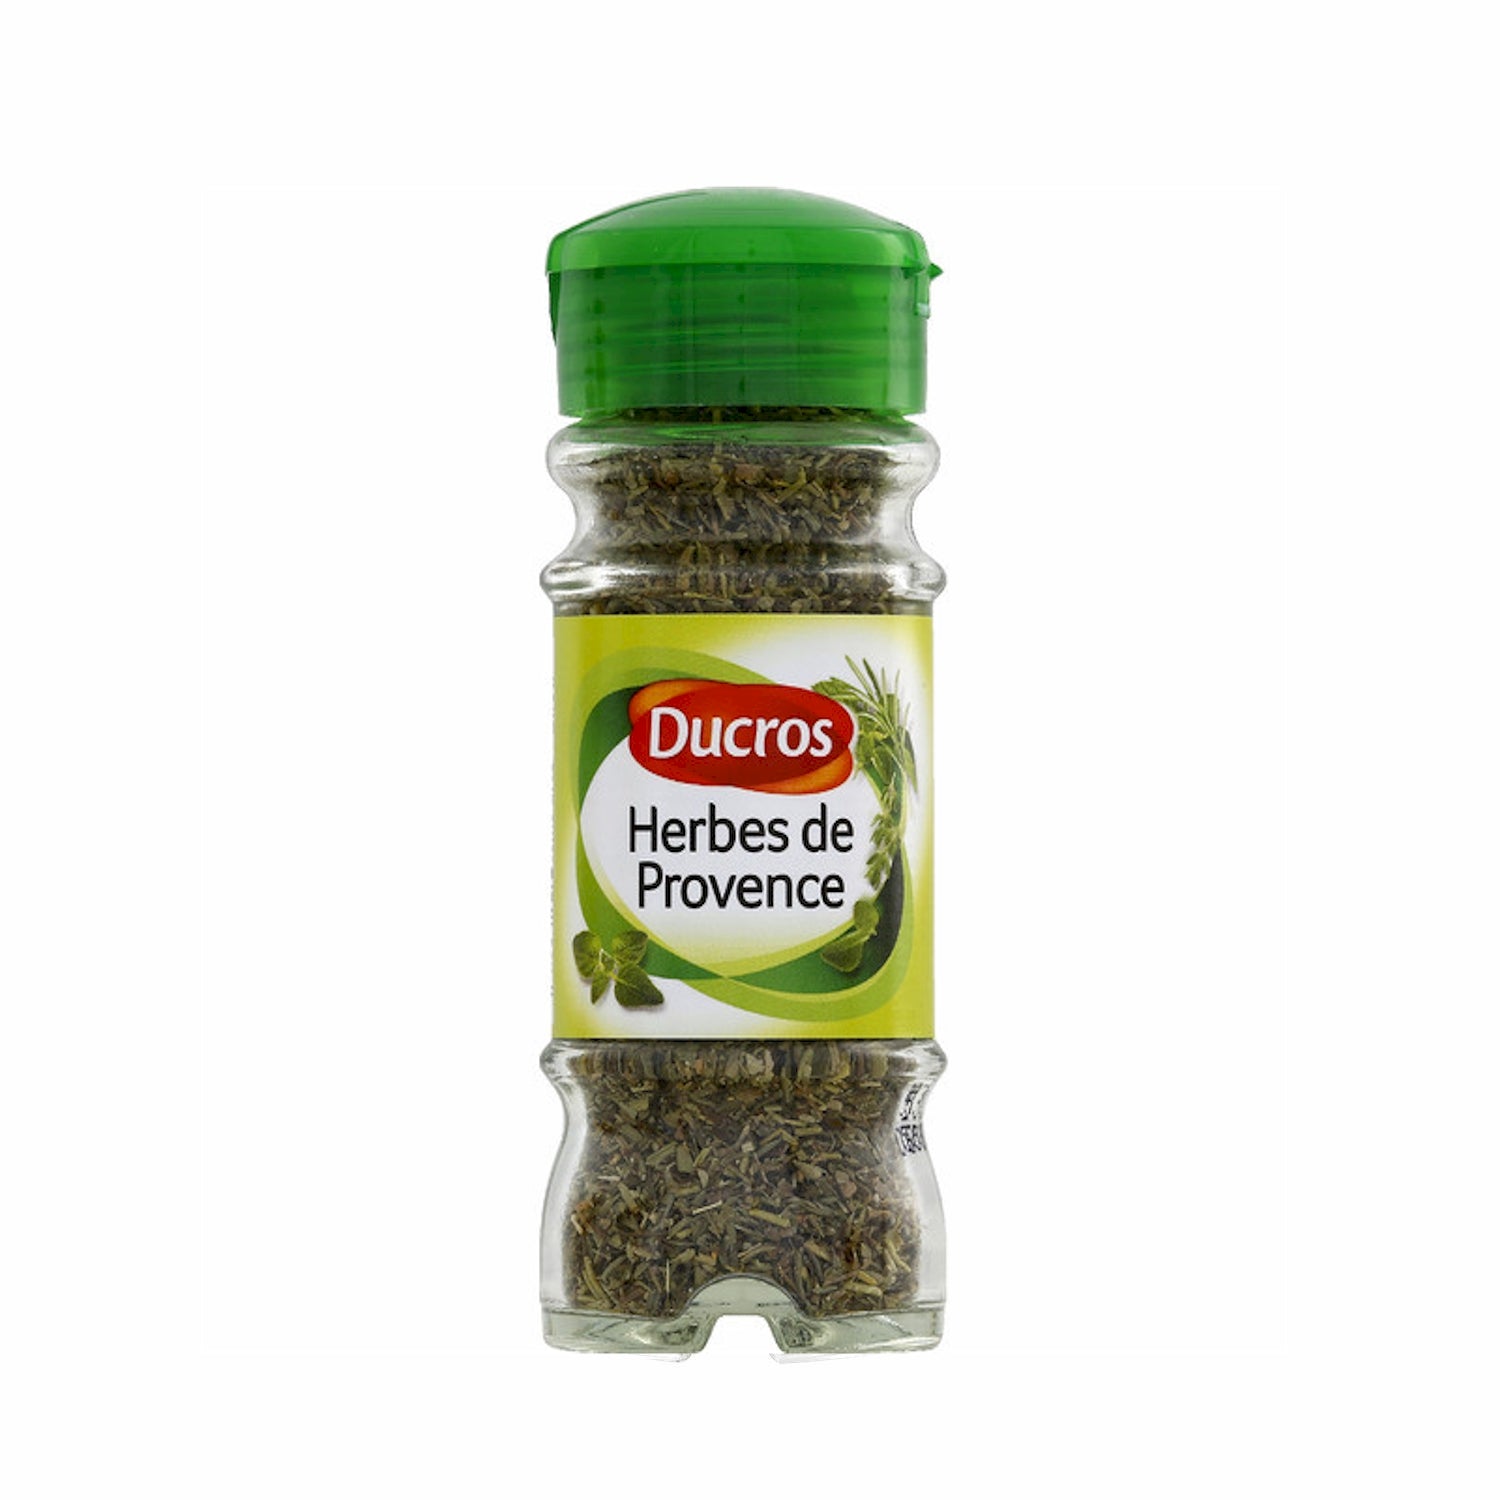 tah>Ducros Herbs of Provence (18g)